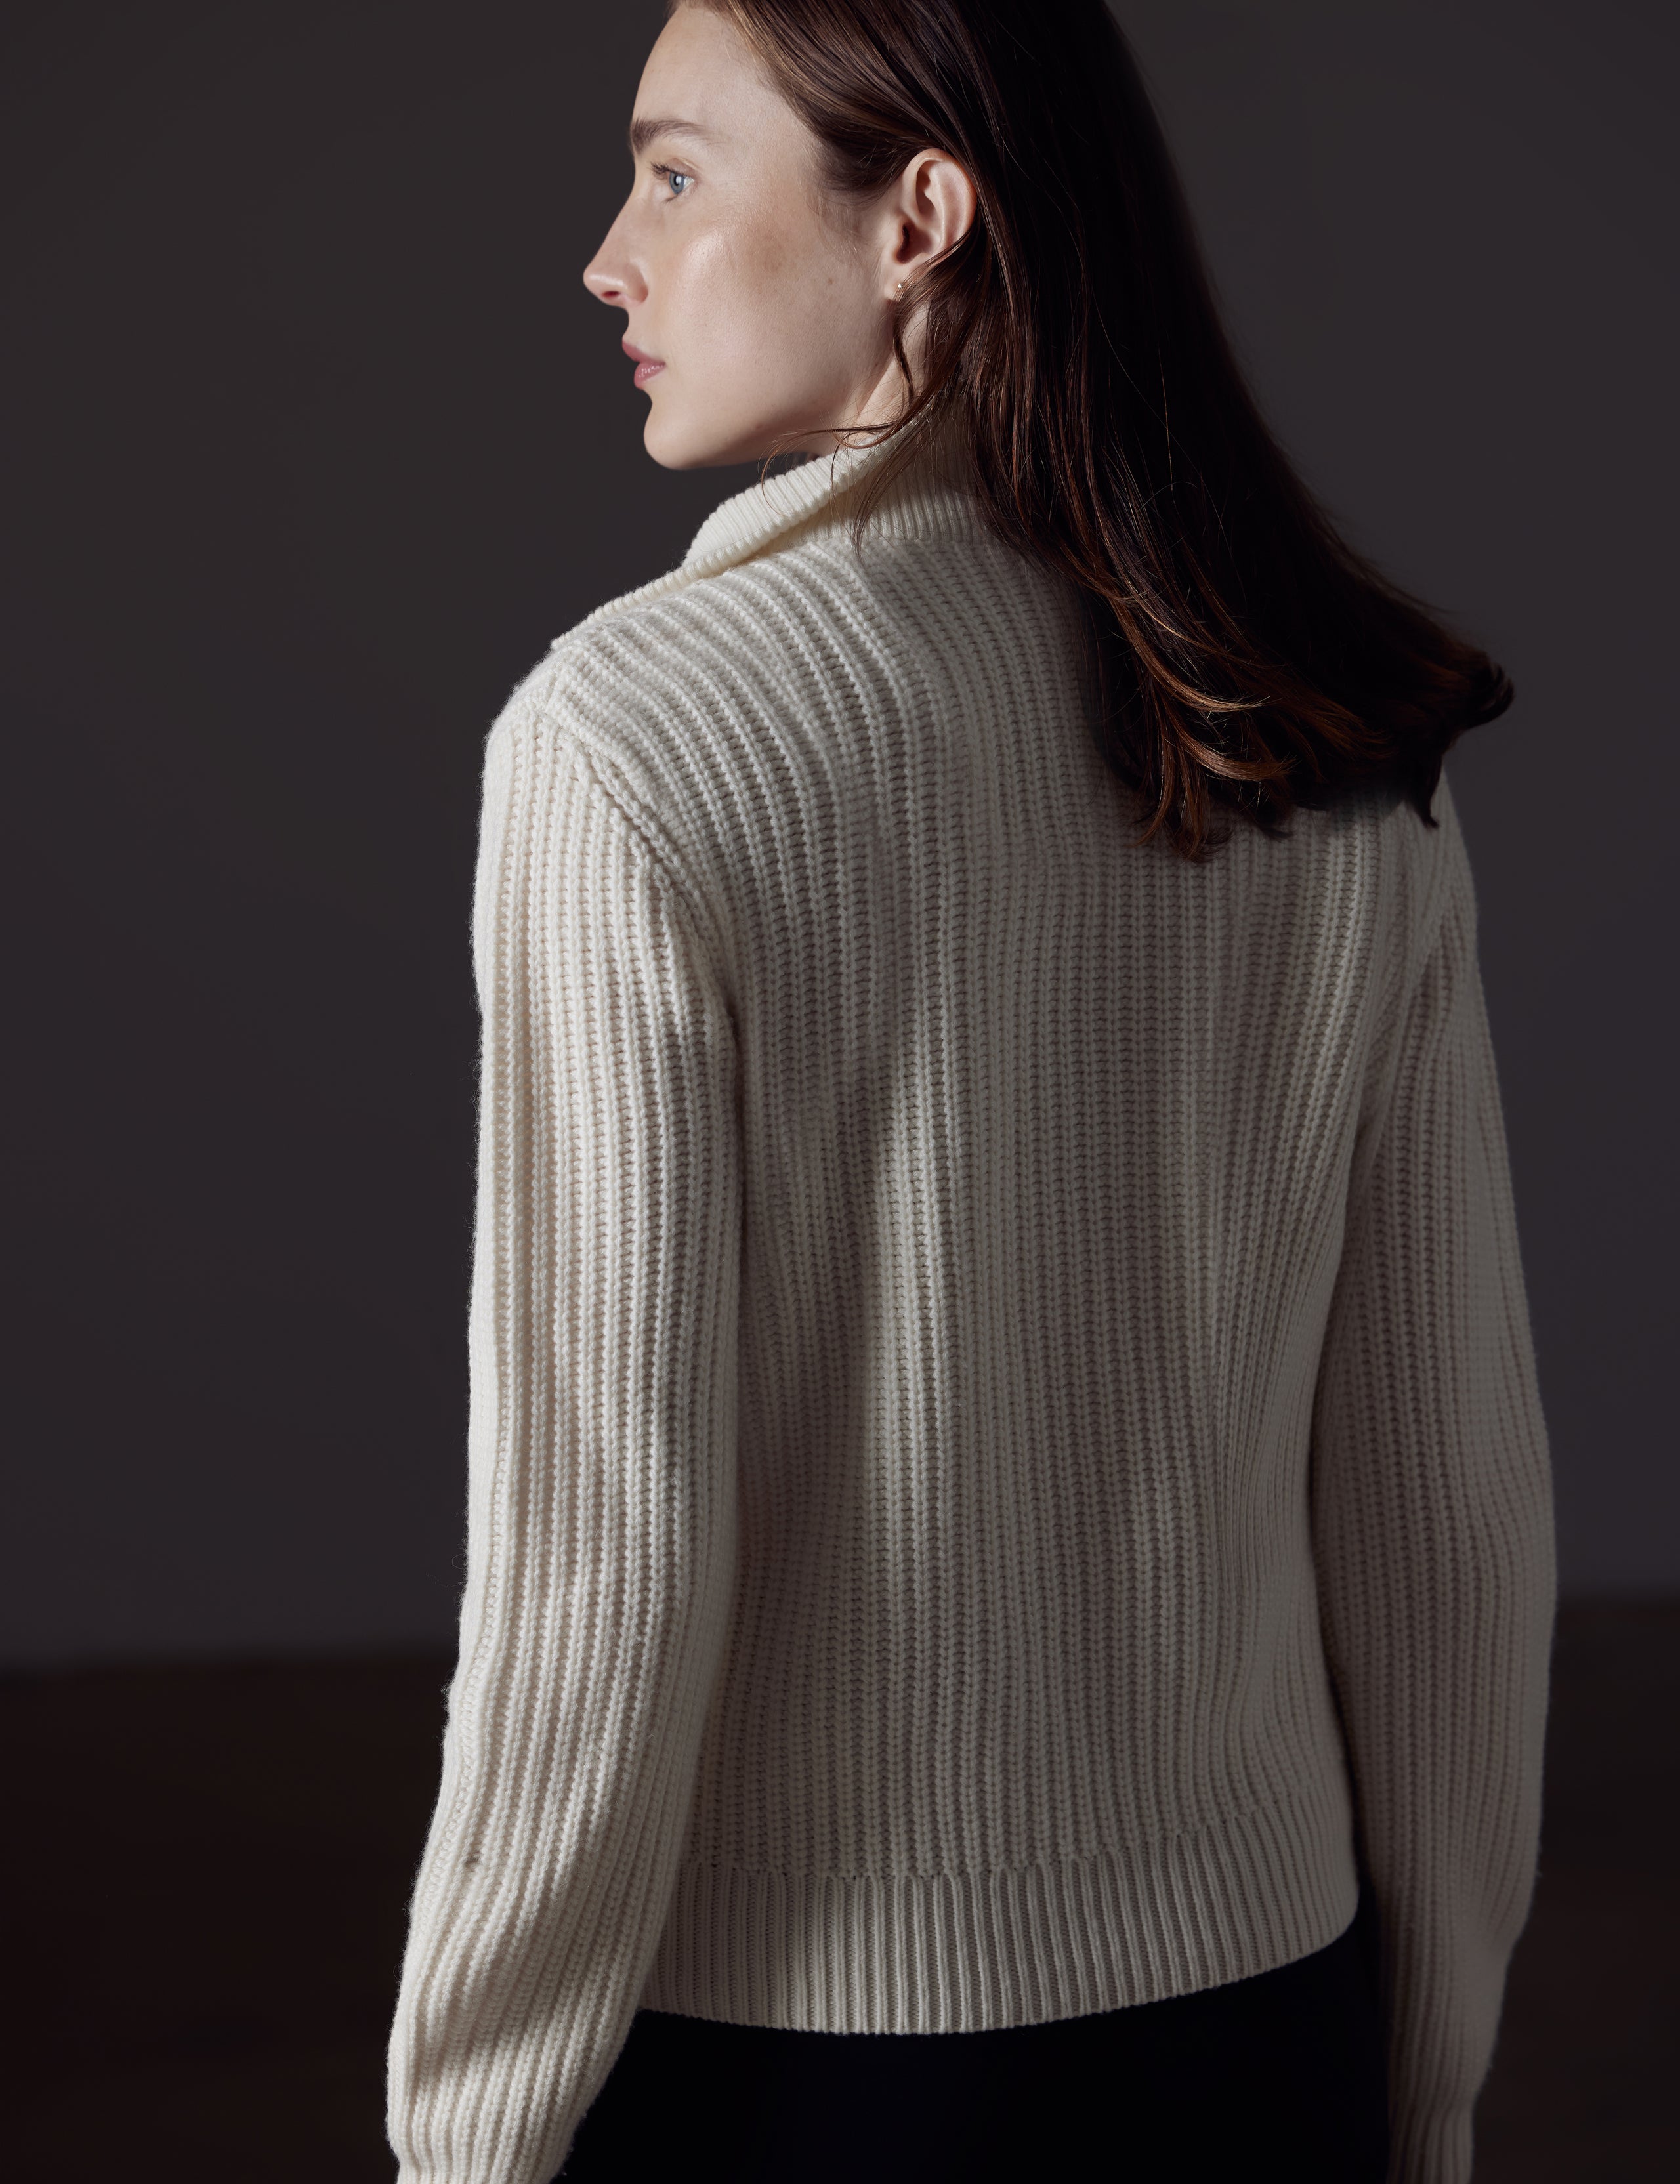 Back view of woman wearing white Davis Half-Zip Sweater